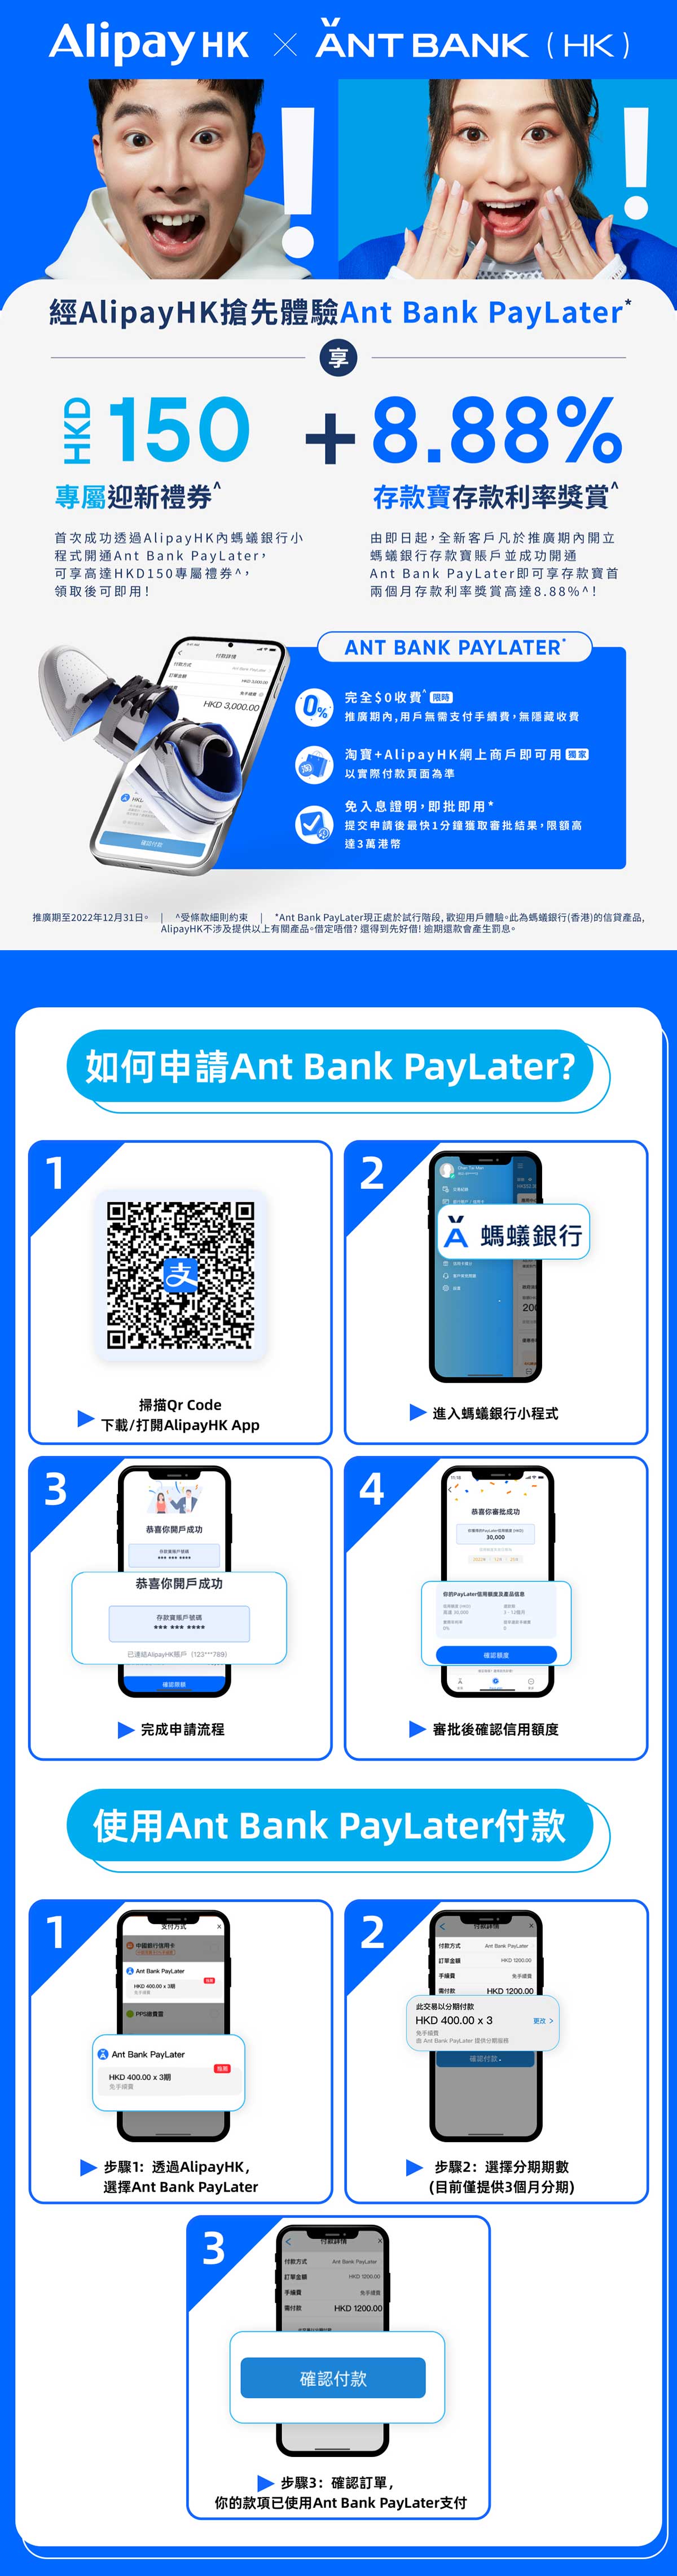 Strawberrynet x Alipay HK x Ant Bank (HK)